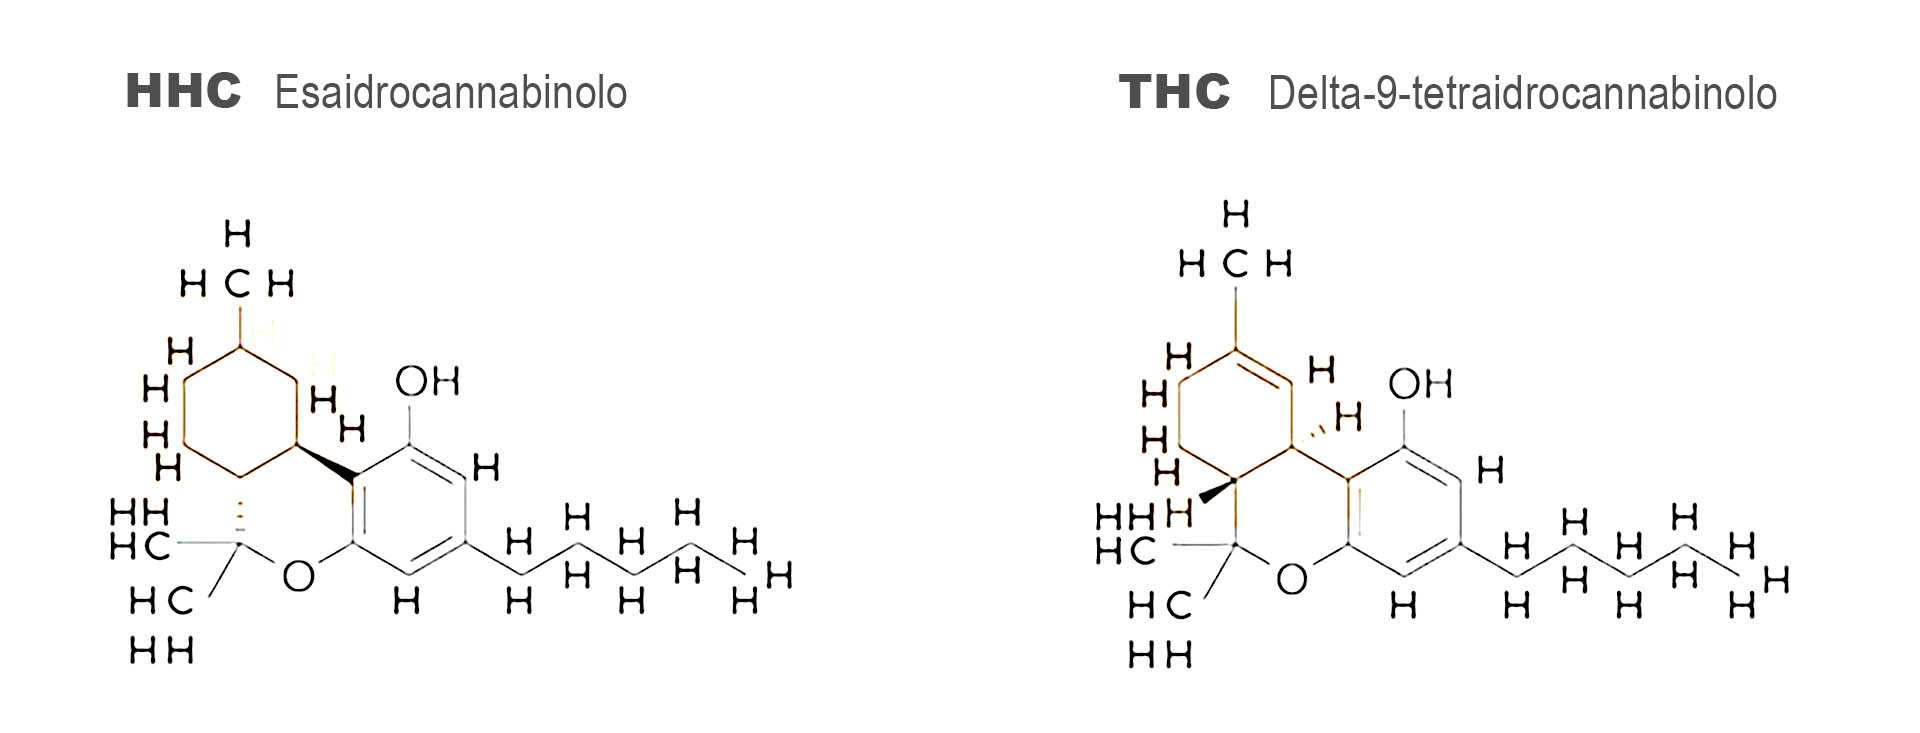 differenza molecolare thc vs hhc